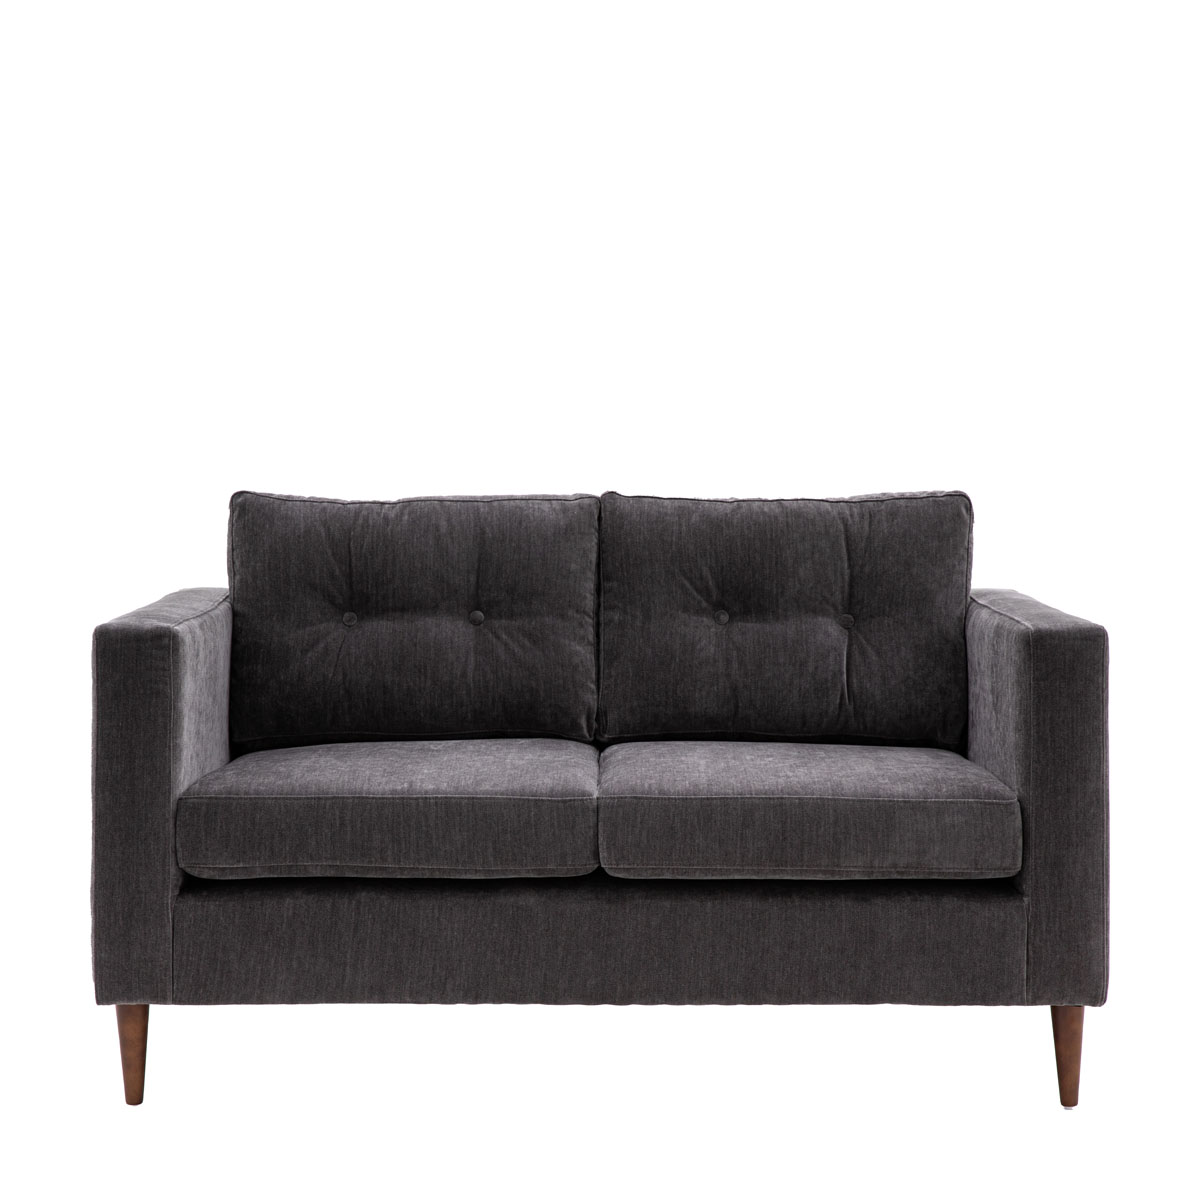 Whitwell Sofa 2 Seater Charcoal 1450x860x840mm